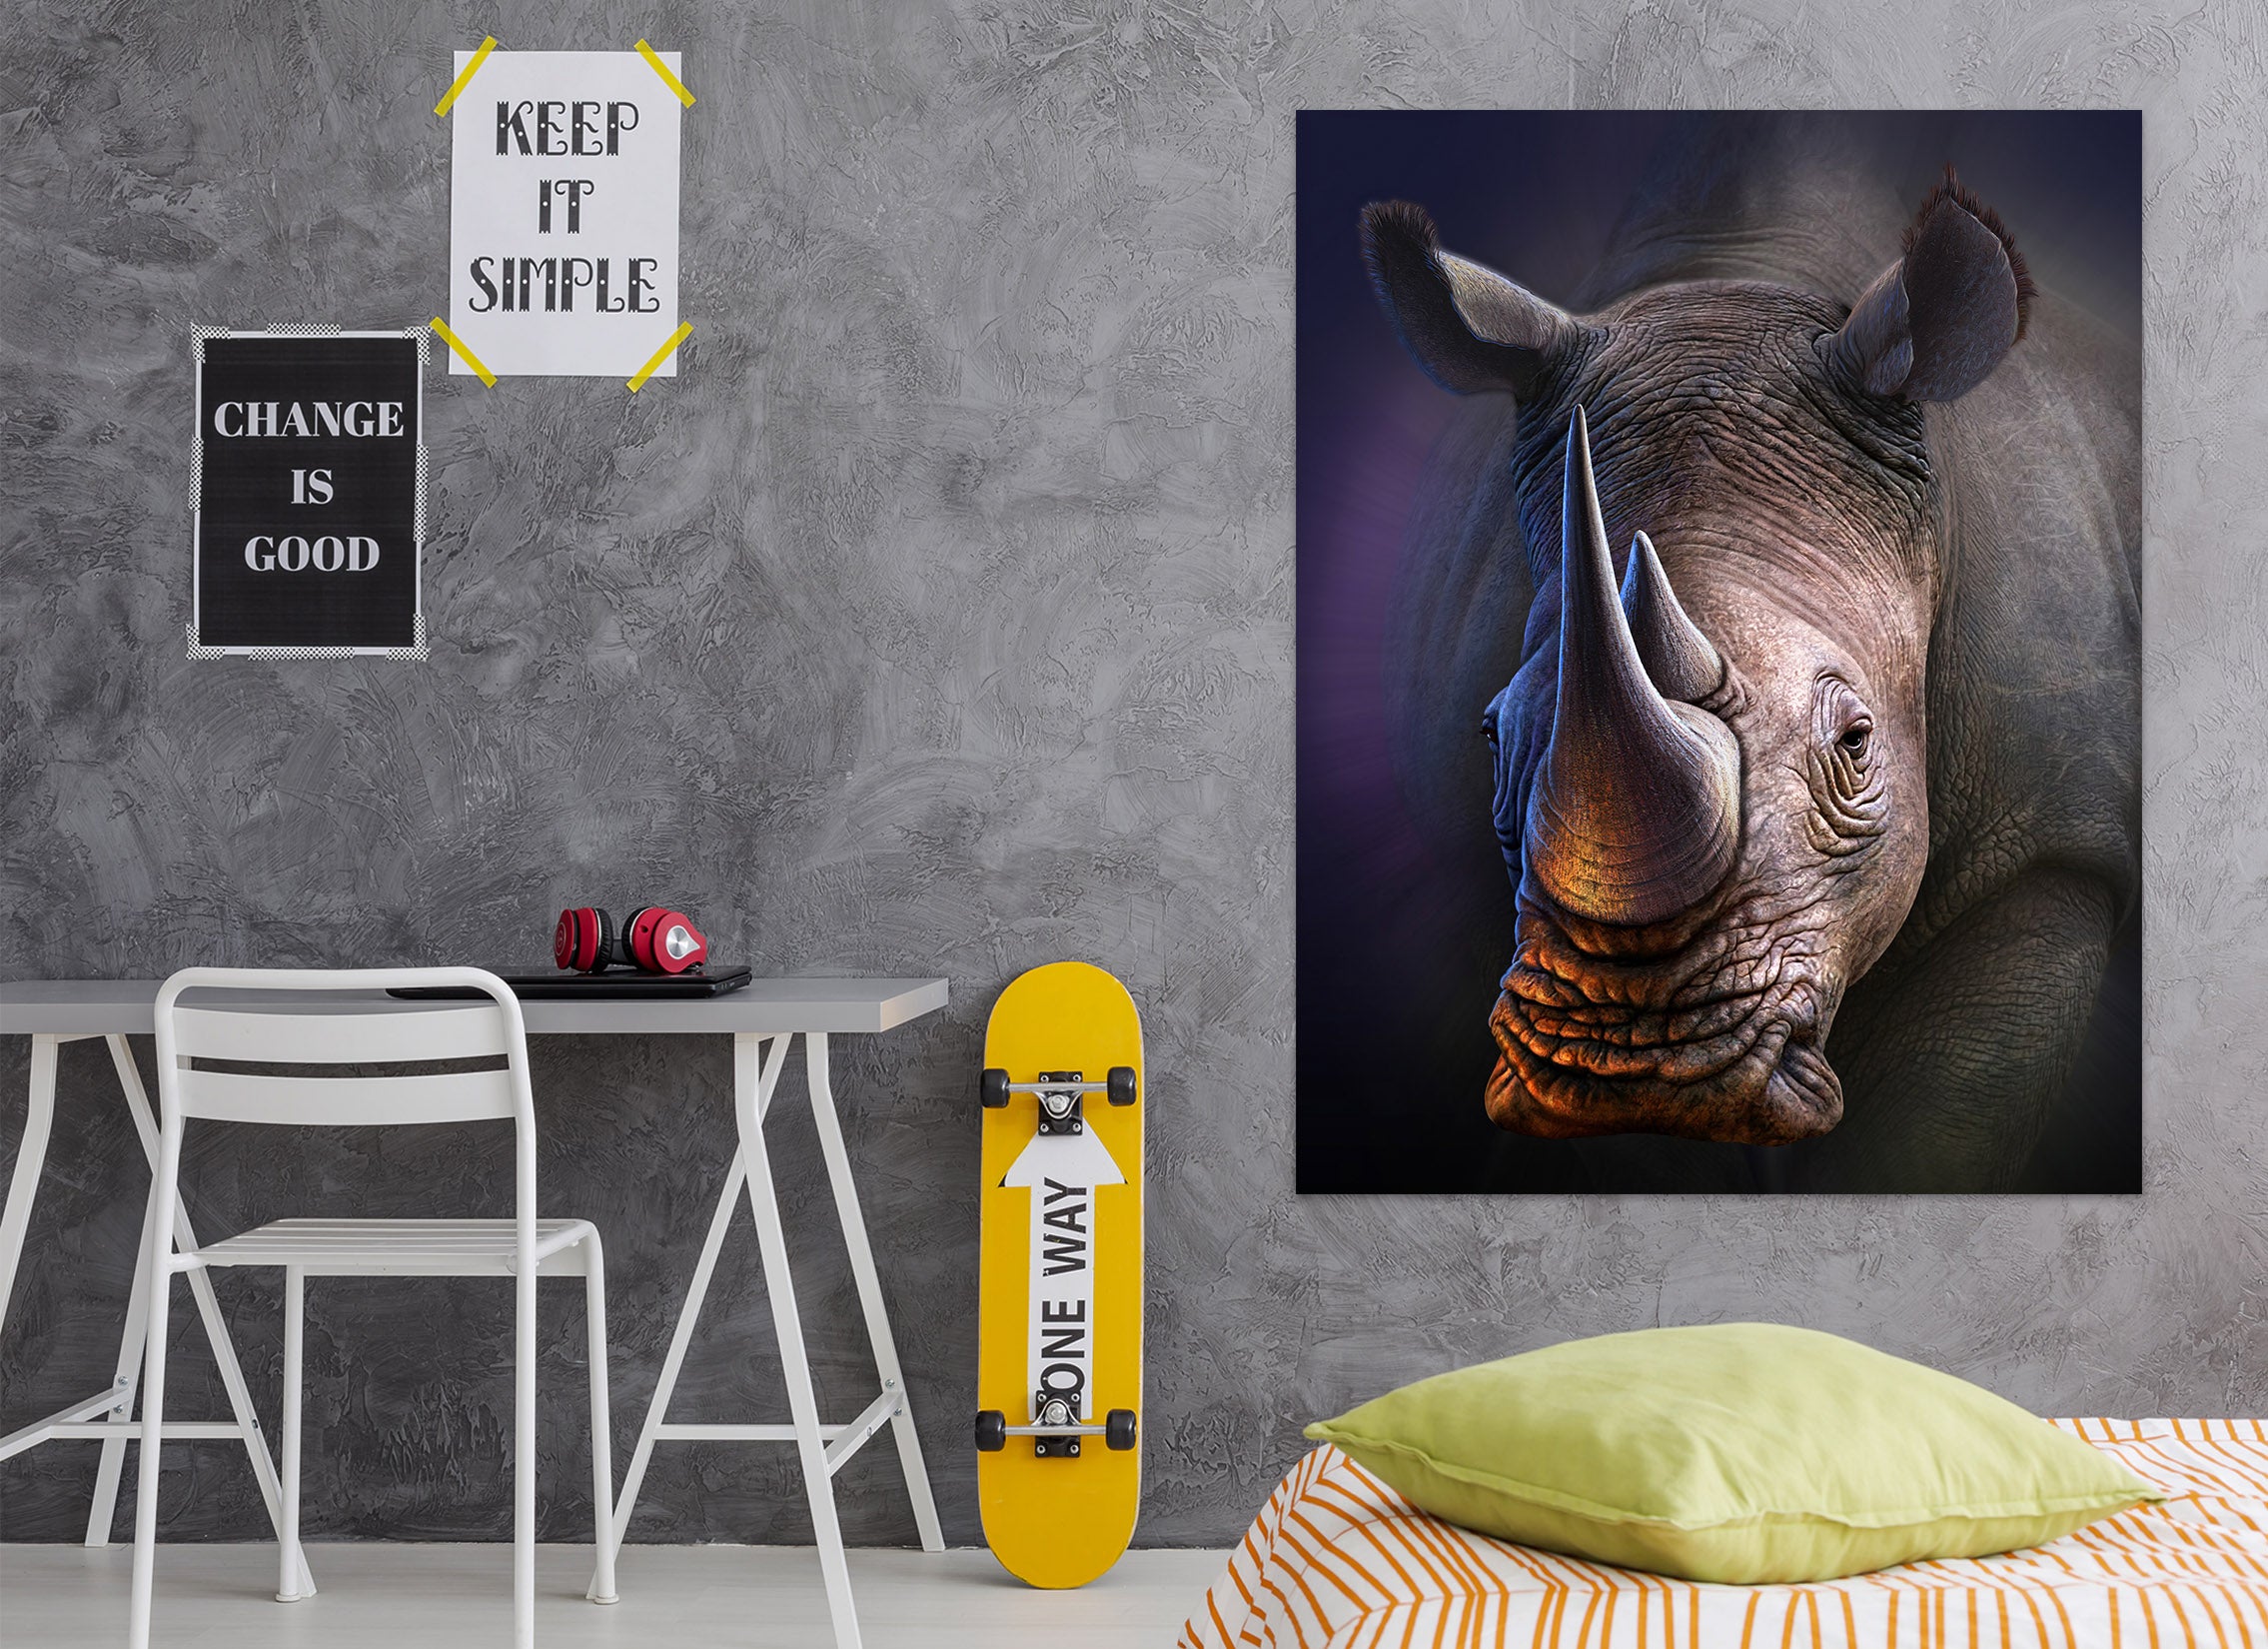 3D Rhino 85207 Jerry LoFaro Wall Sticker